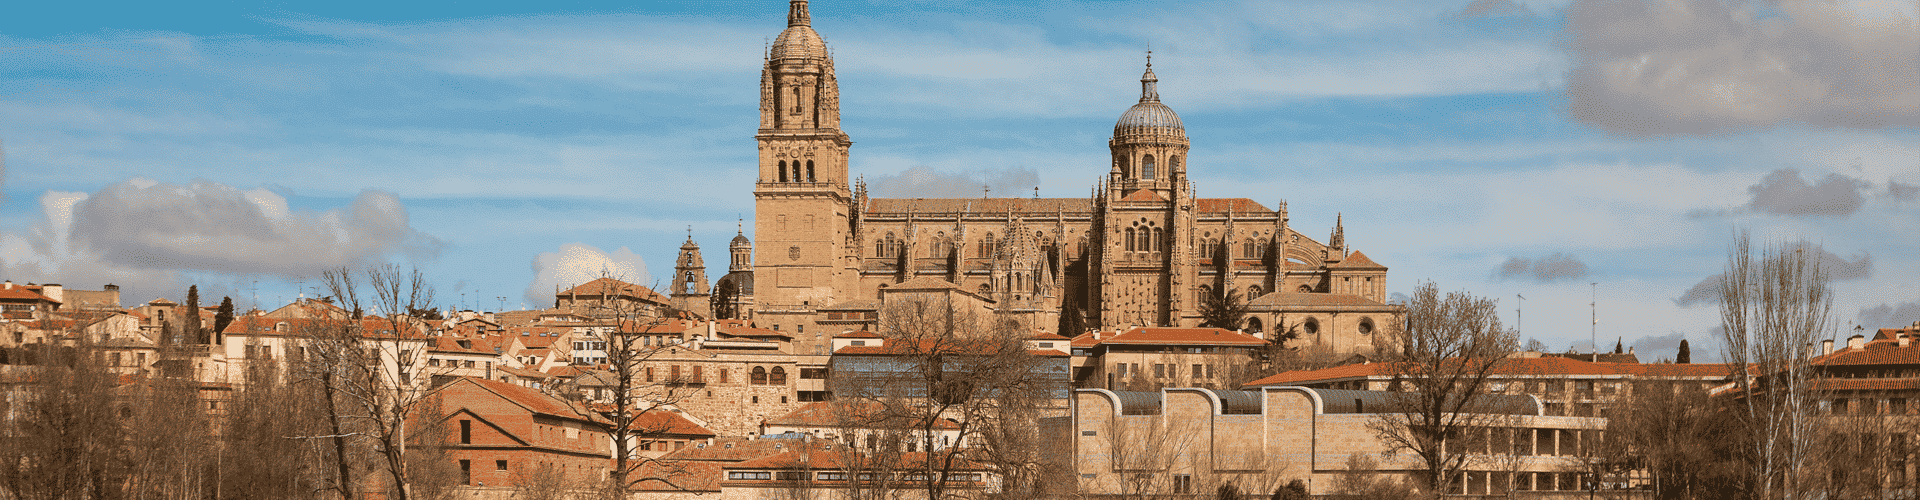 Essential Free Tour Salamanca Banner